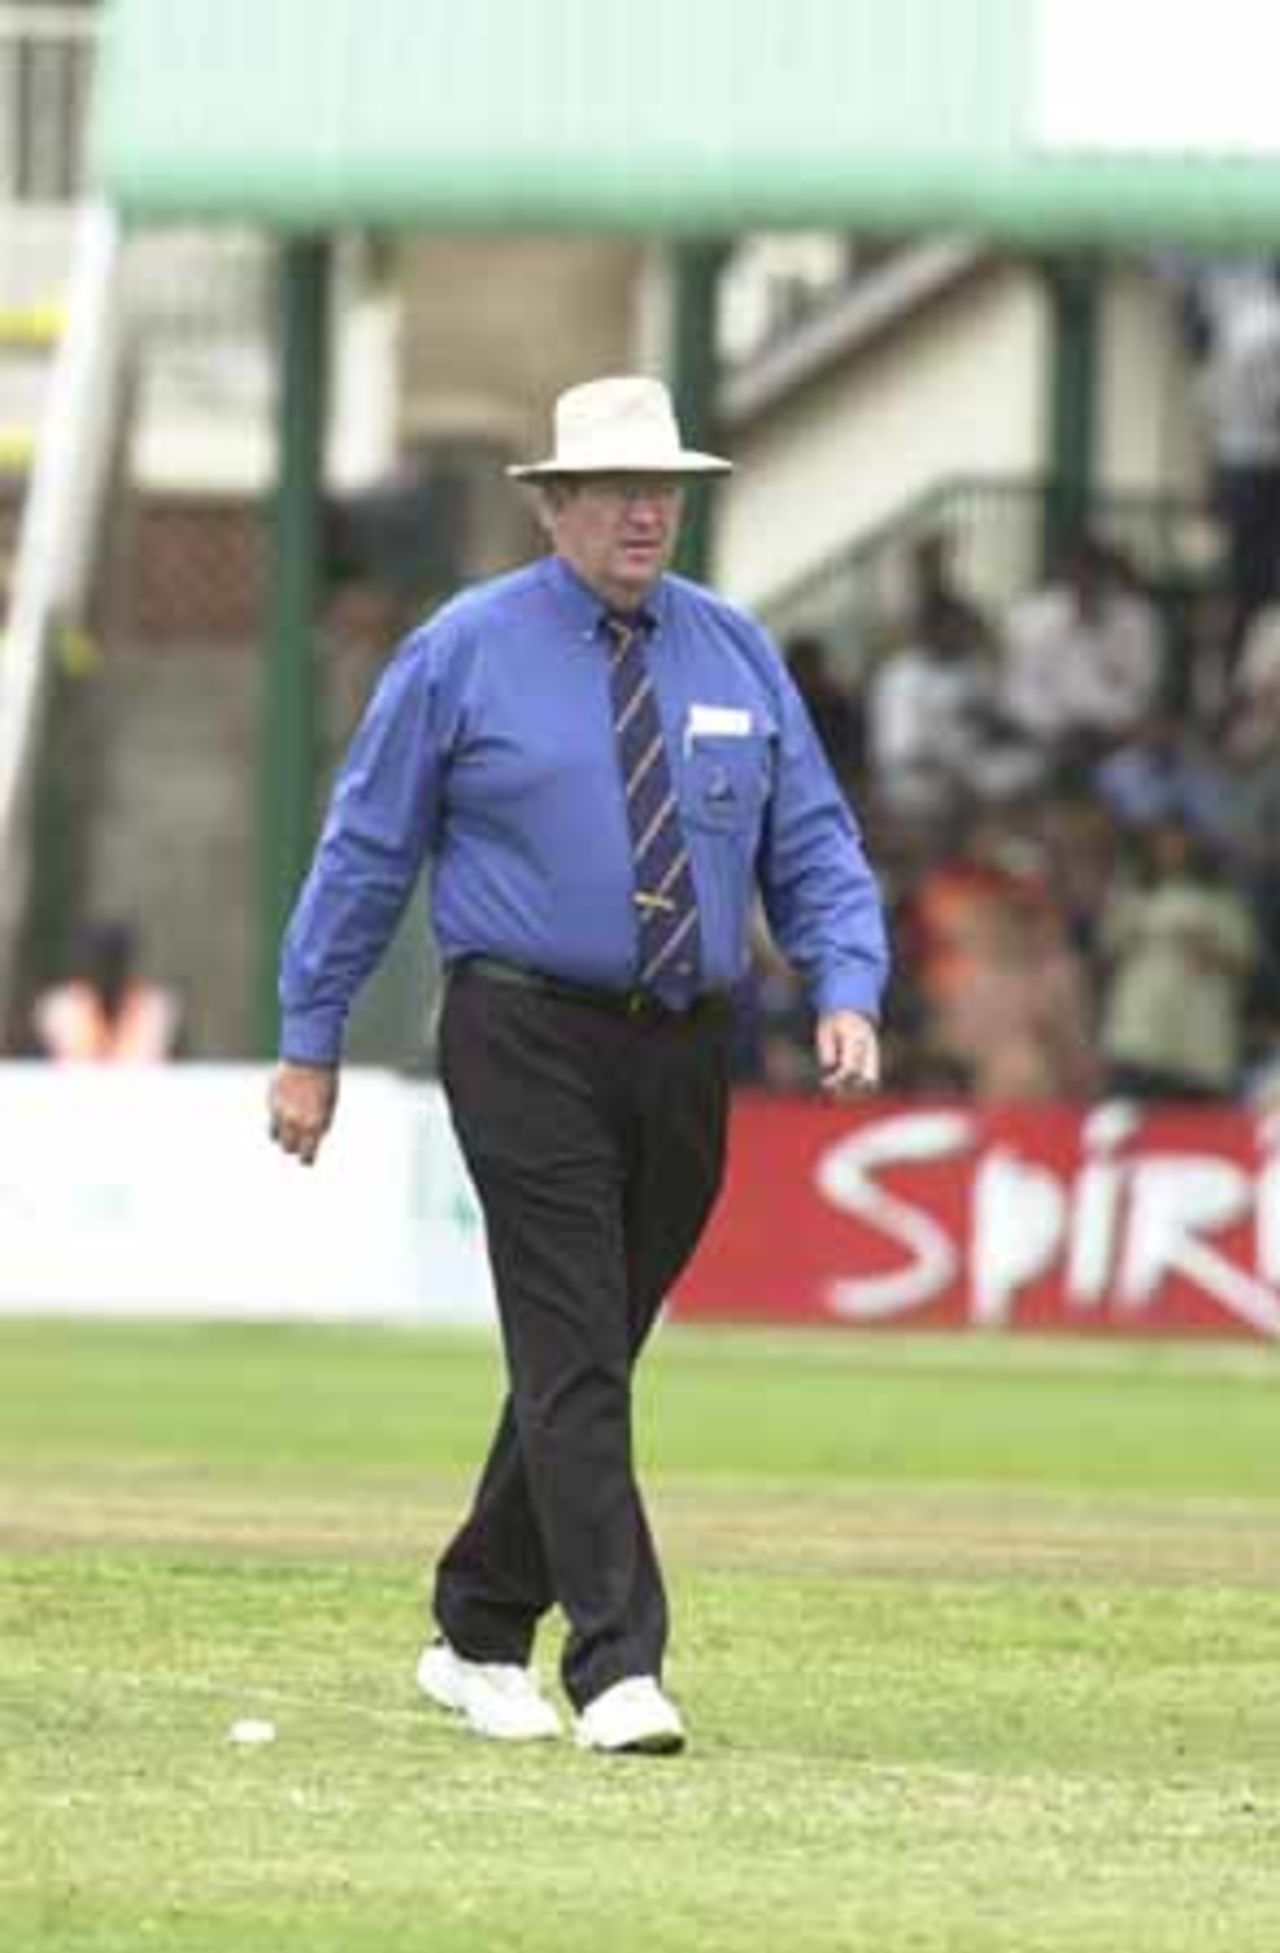 England v South Africa at the ICC KO 2000, Nairobi Gymkhana, October 2000